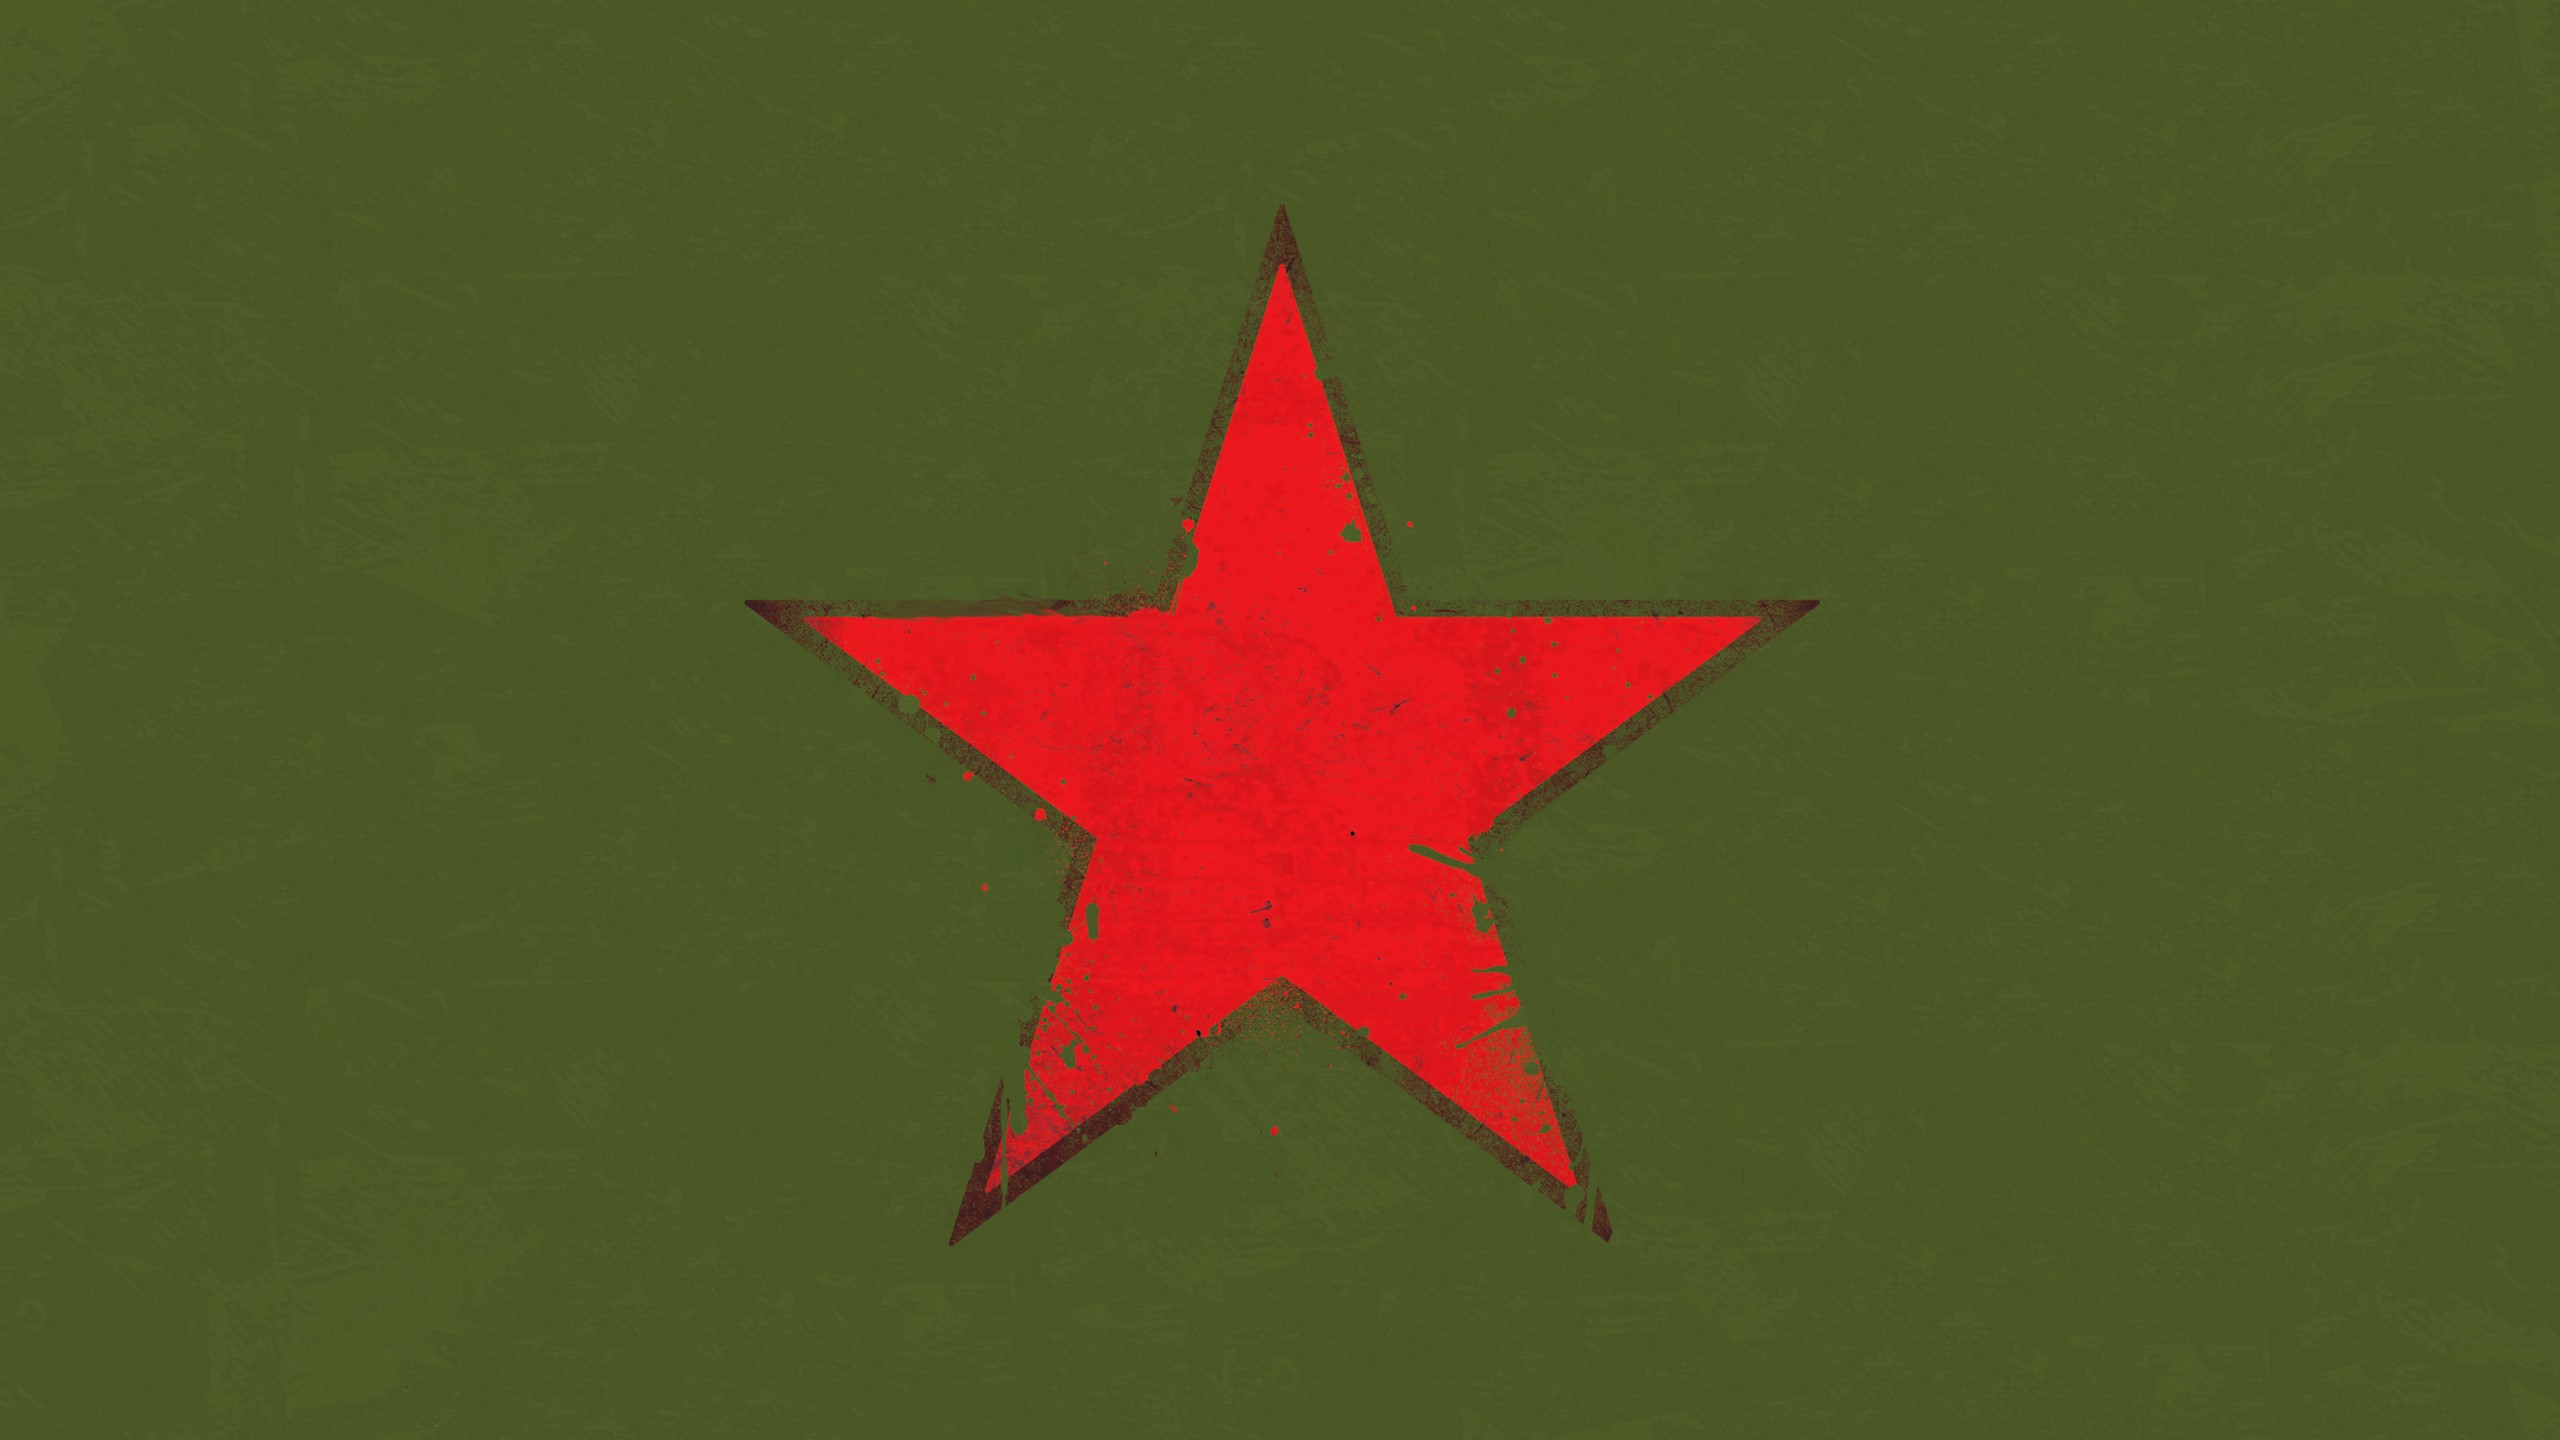 digital Art, CGI, Minimalism, Stars, Red Star, USSR, Army, Splashes, Green Background, Military Wallpaper